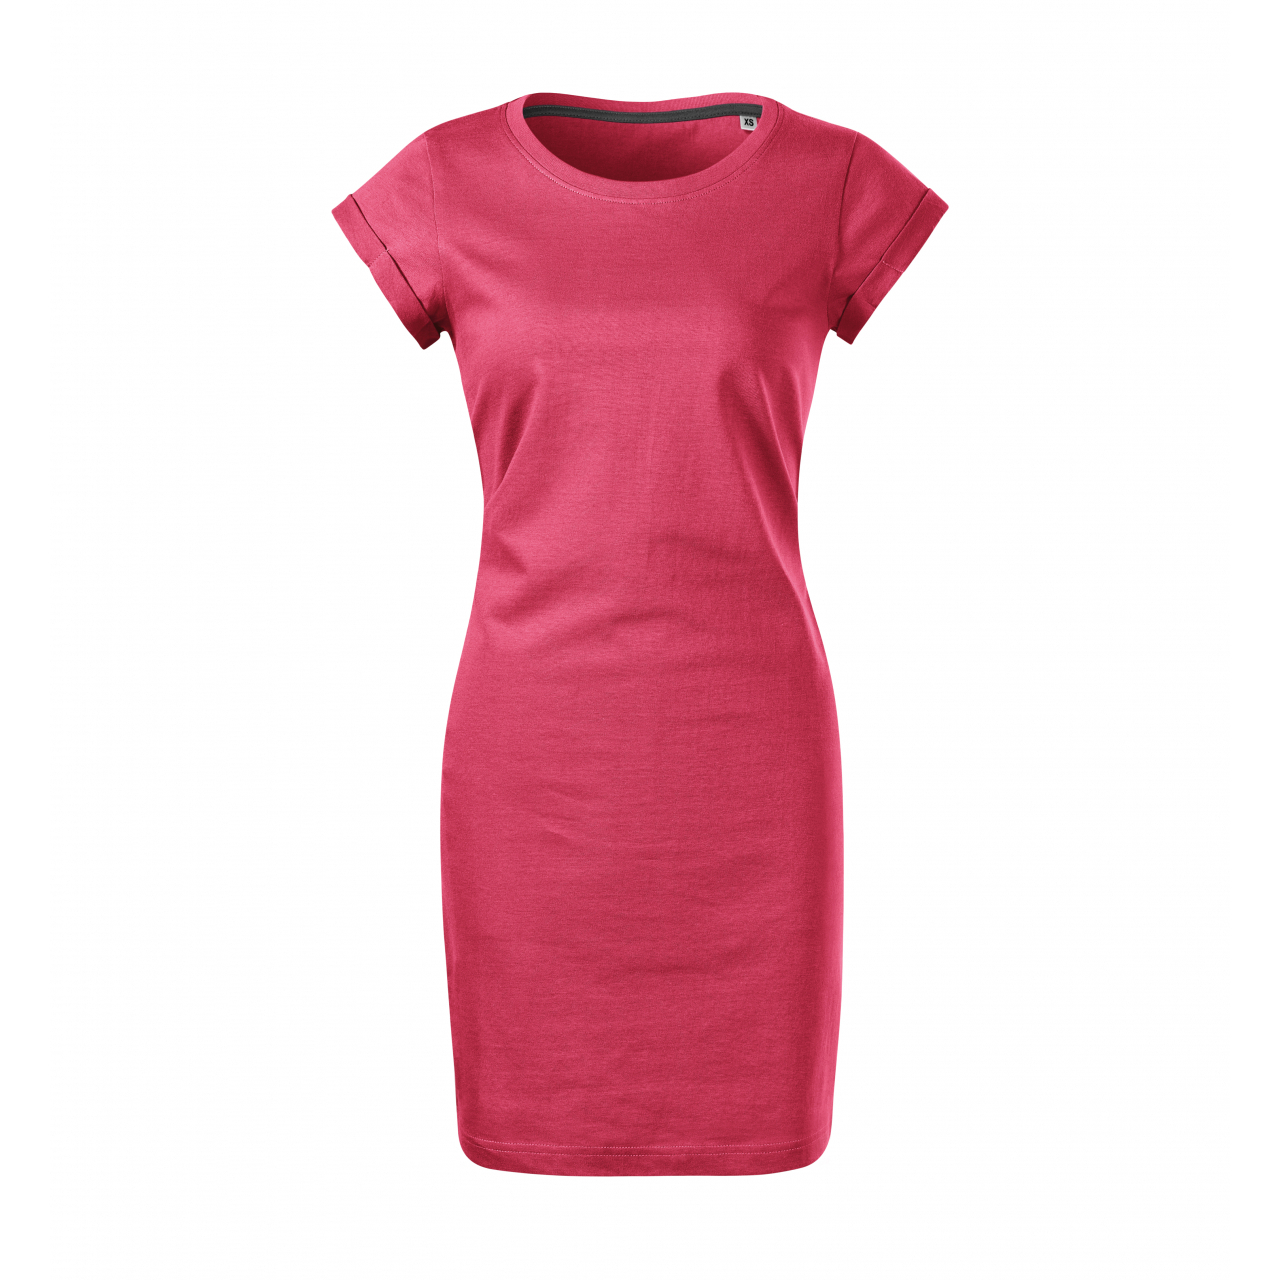 Šaty dámské Malfini Freedom - růžové, XS